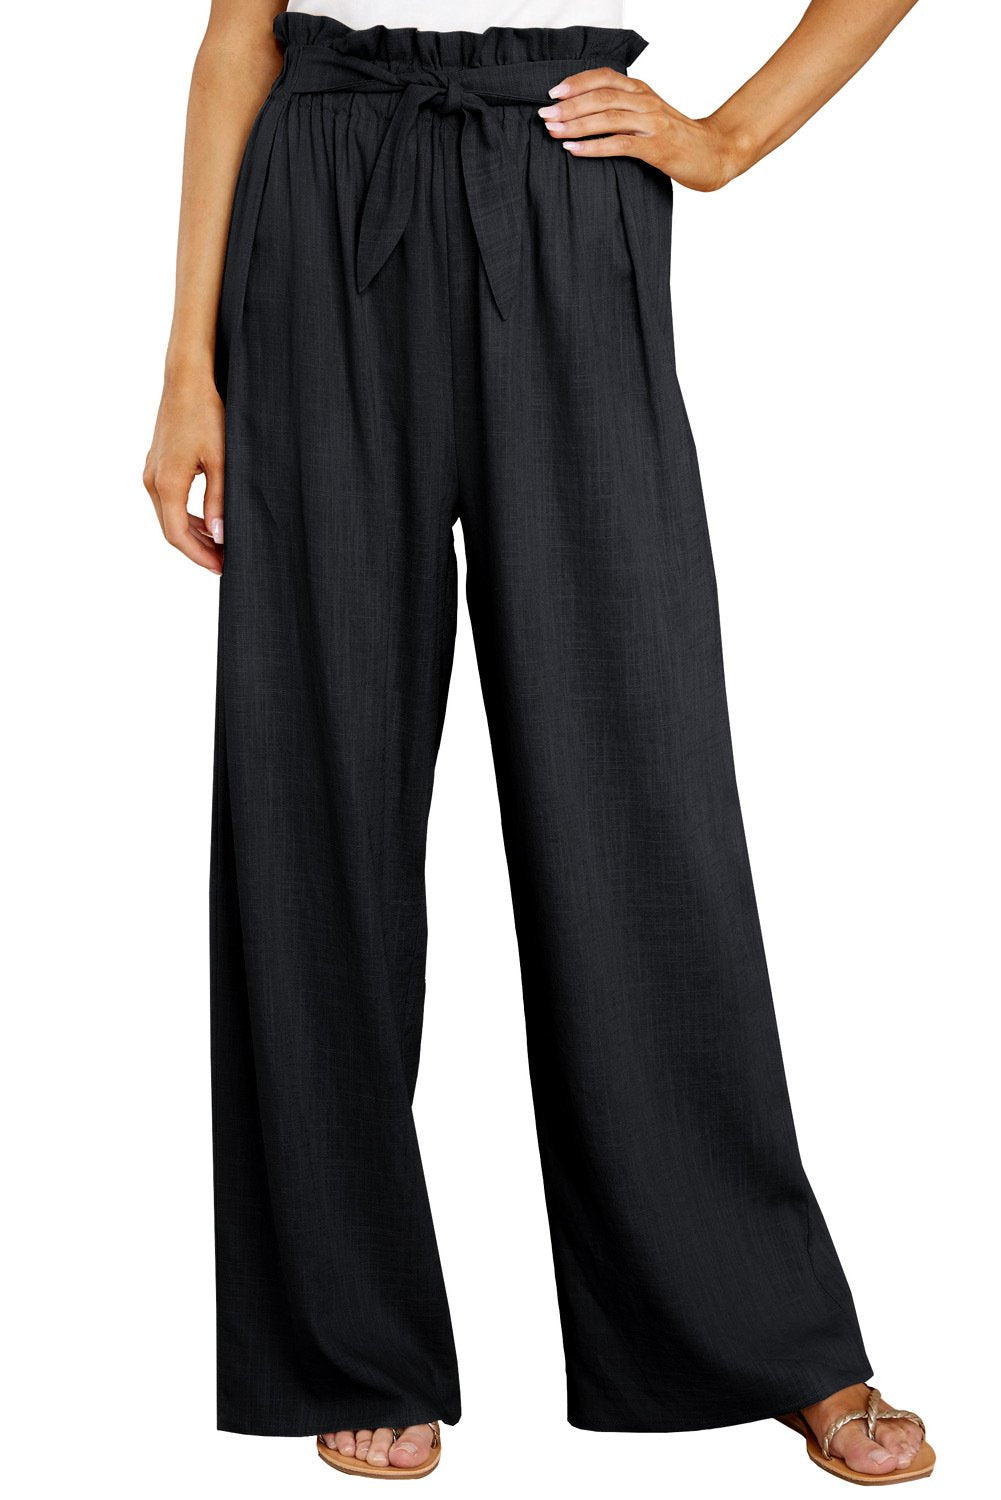 Casual Women Linen Long Pants-Women Bottoms-Black-S-Free Shipping Leatheretro